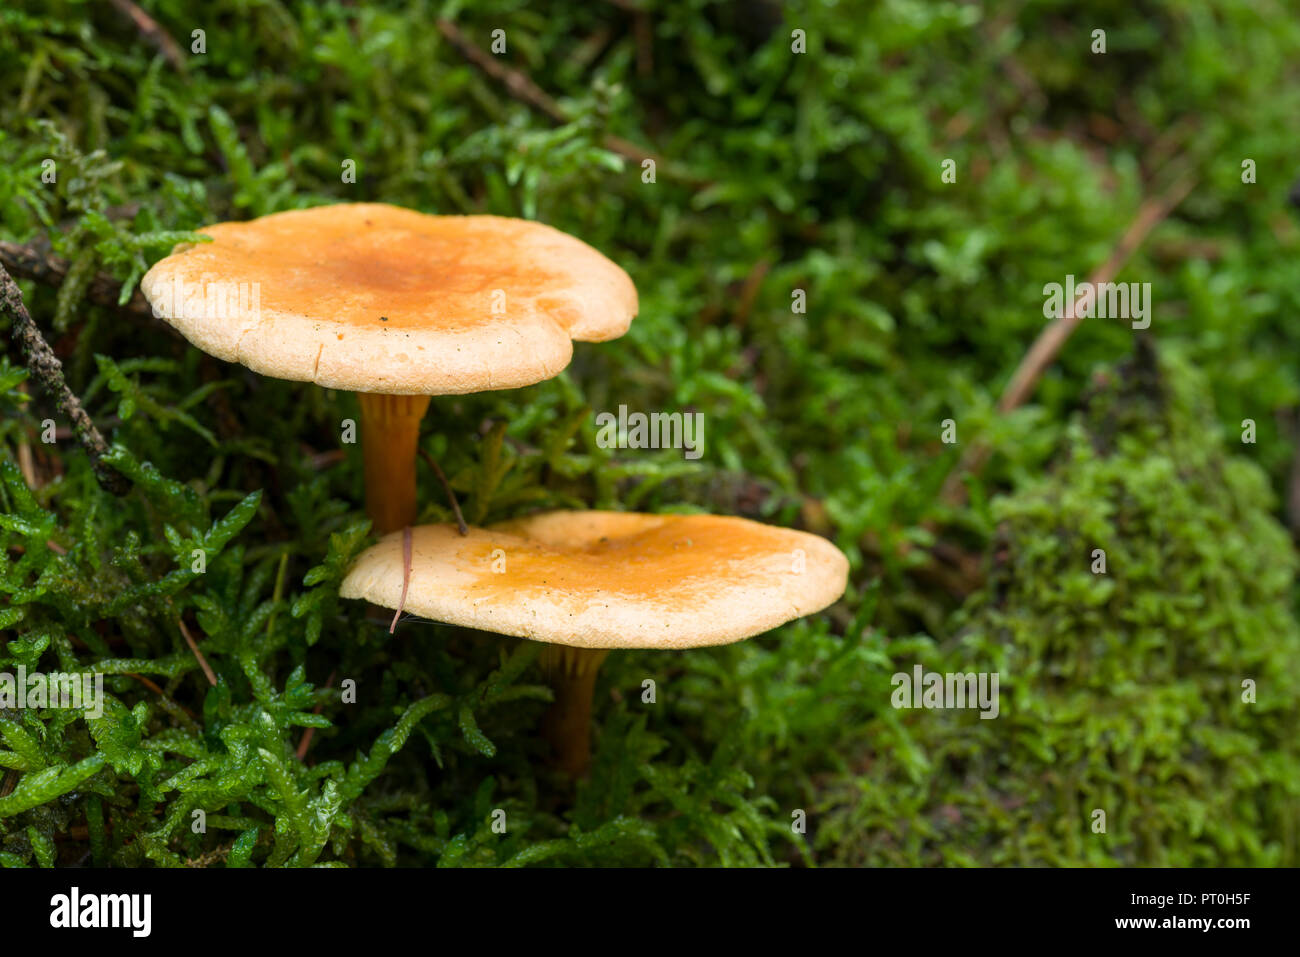 Fausse Chanterelle (Hygrophoropsis aurantiaca) champignons en bois Stockhill, Somerset, Angleterre. Banque D'Images